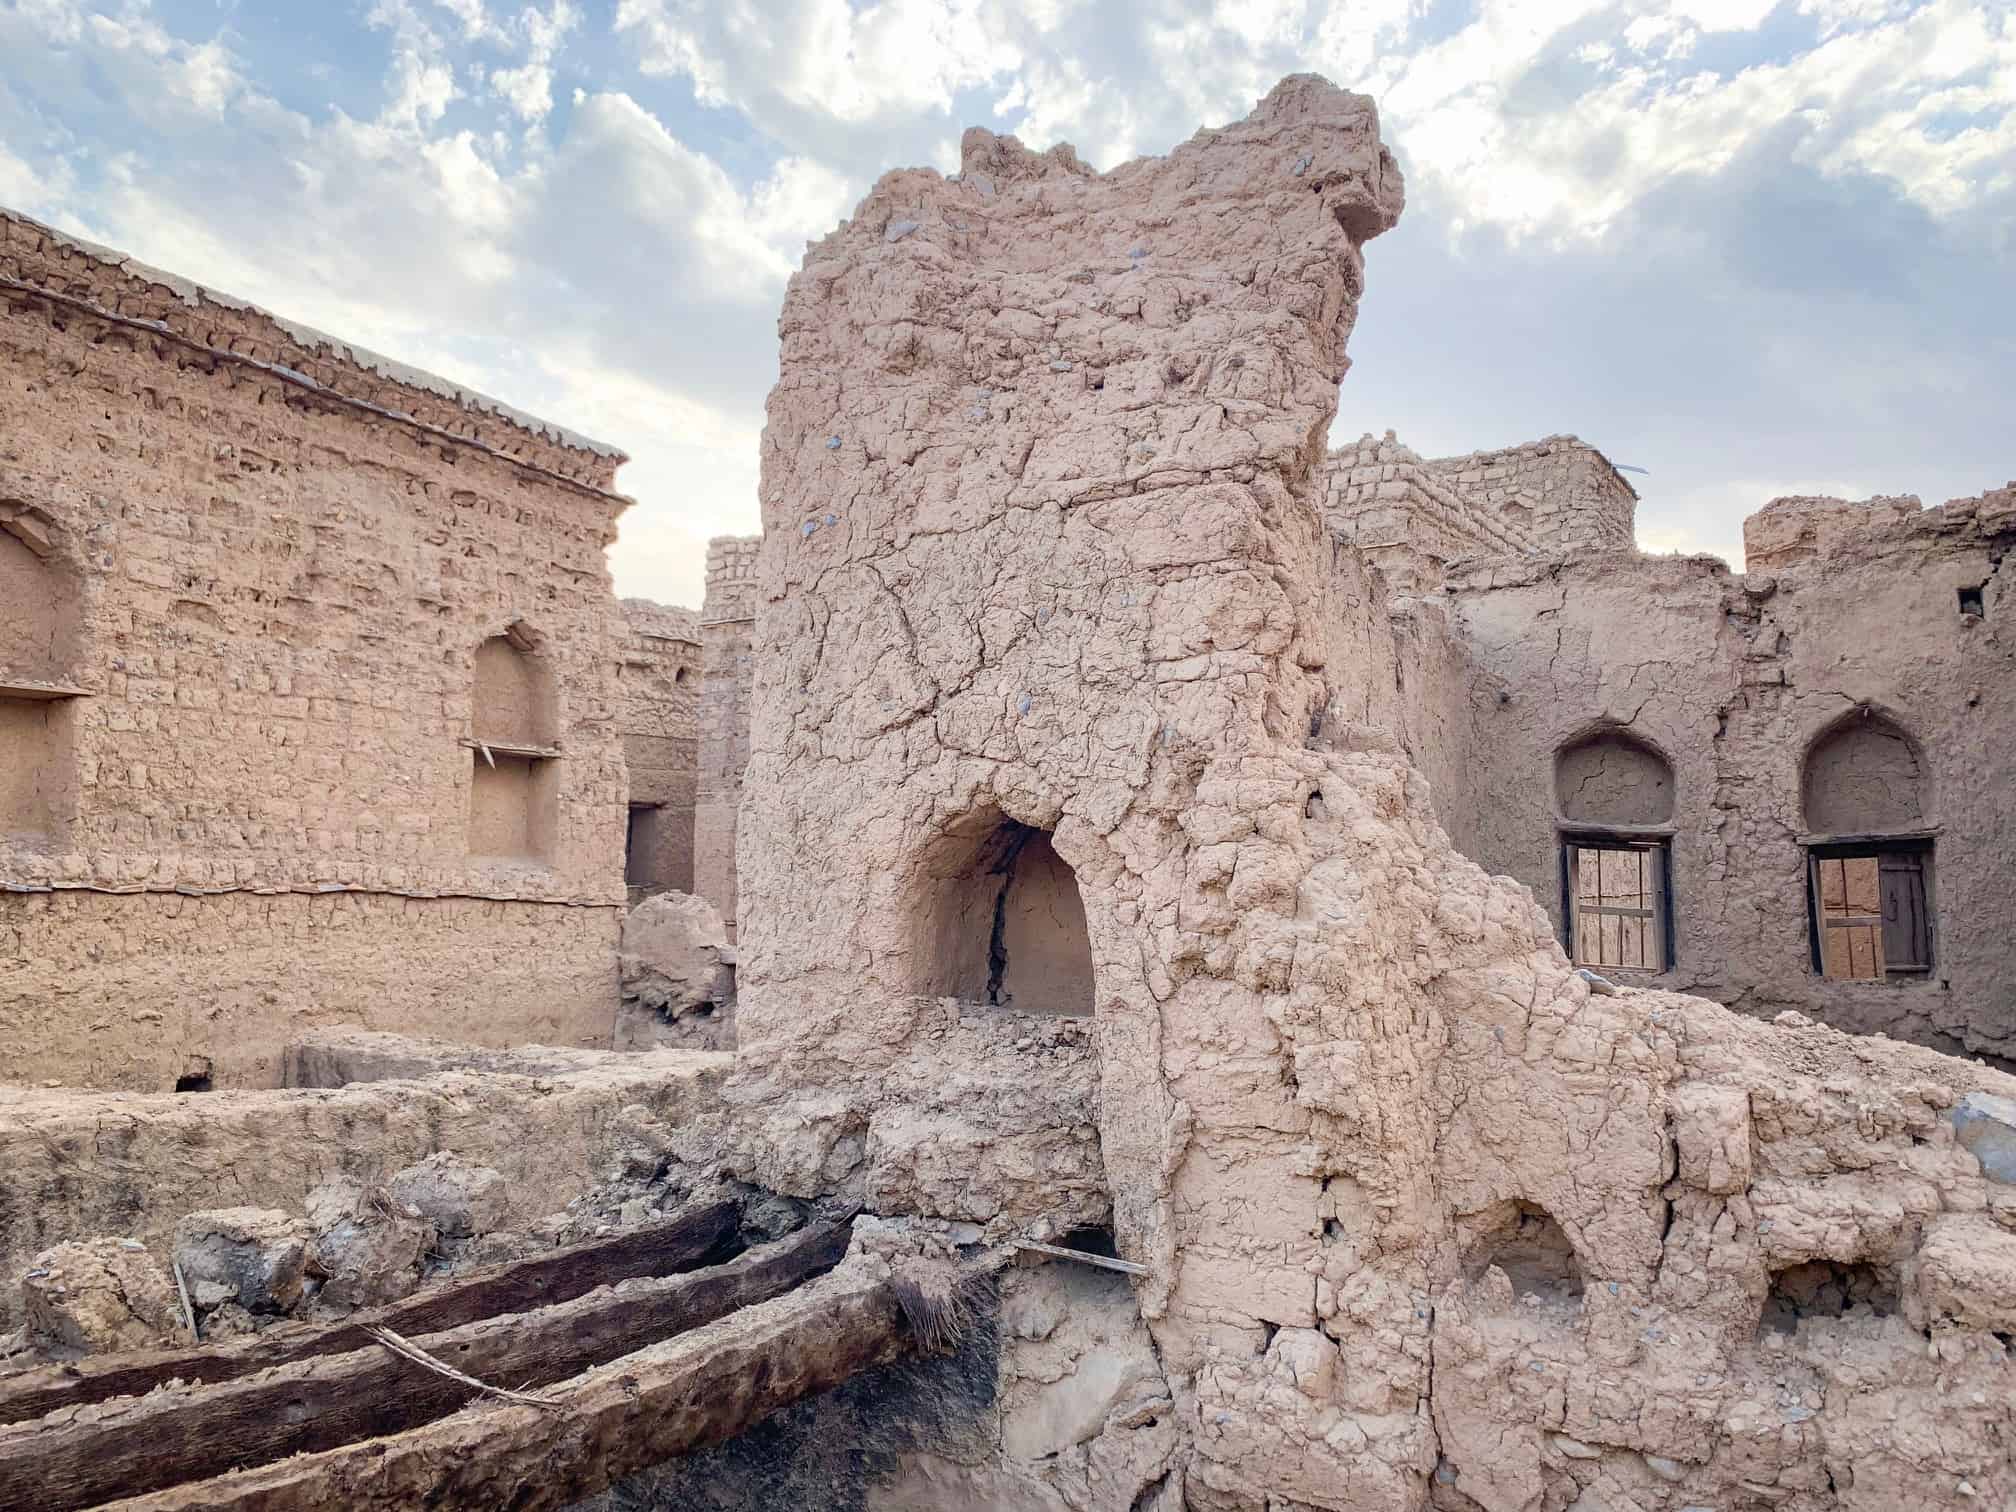 Crumbling building in Al Hamra Oman Village